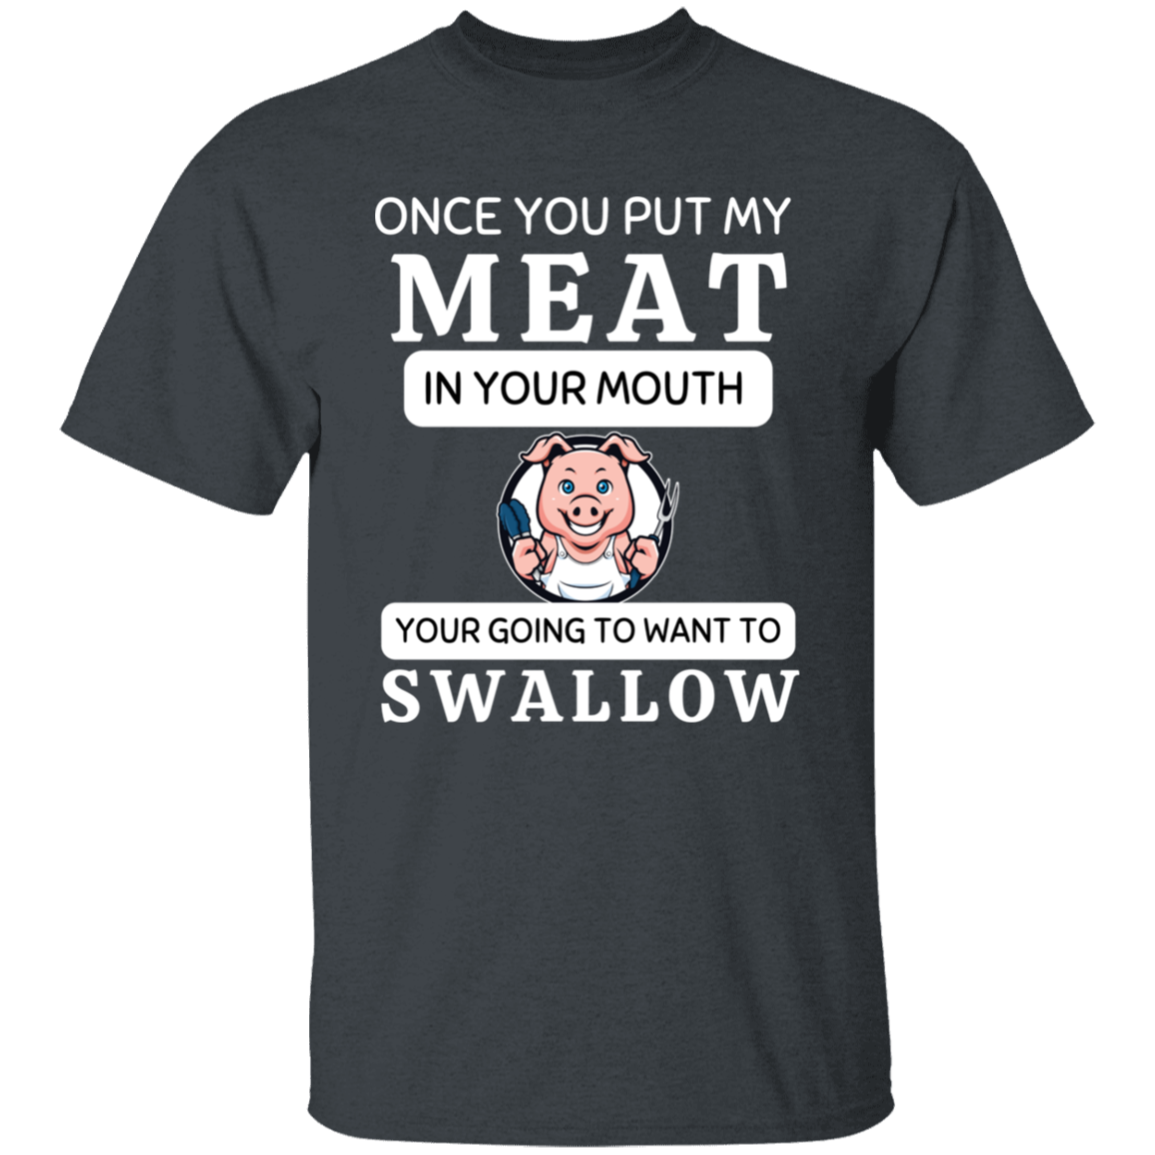 My Meat Men's T-Shirt